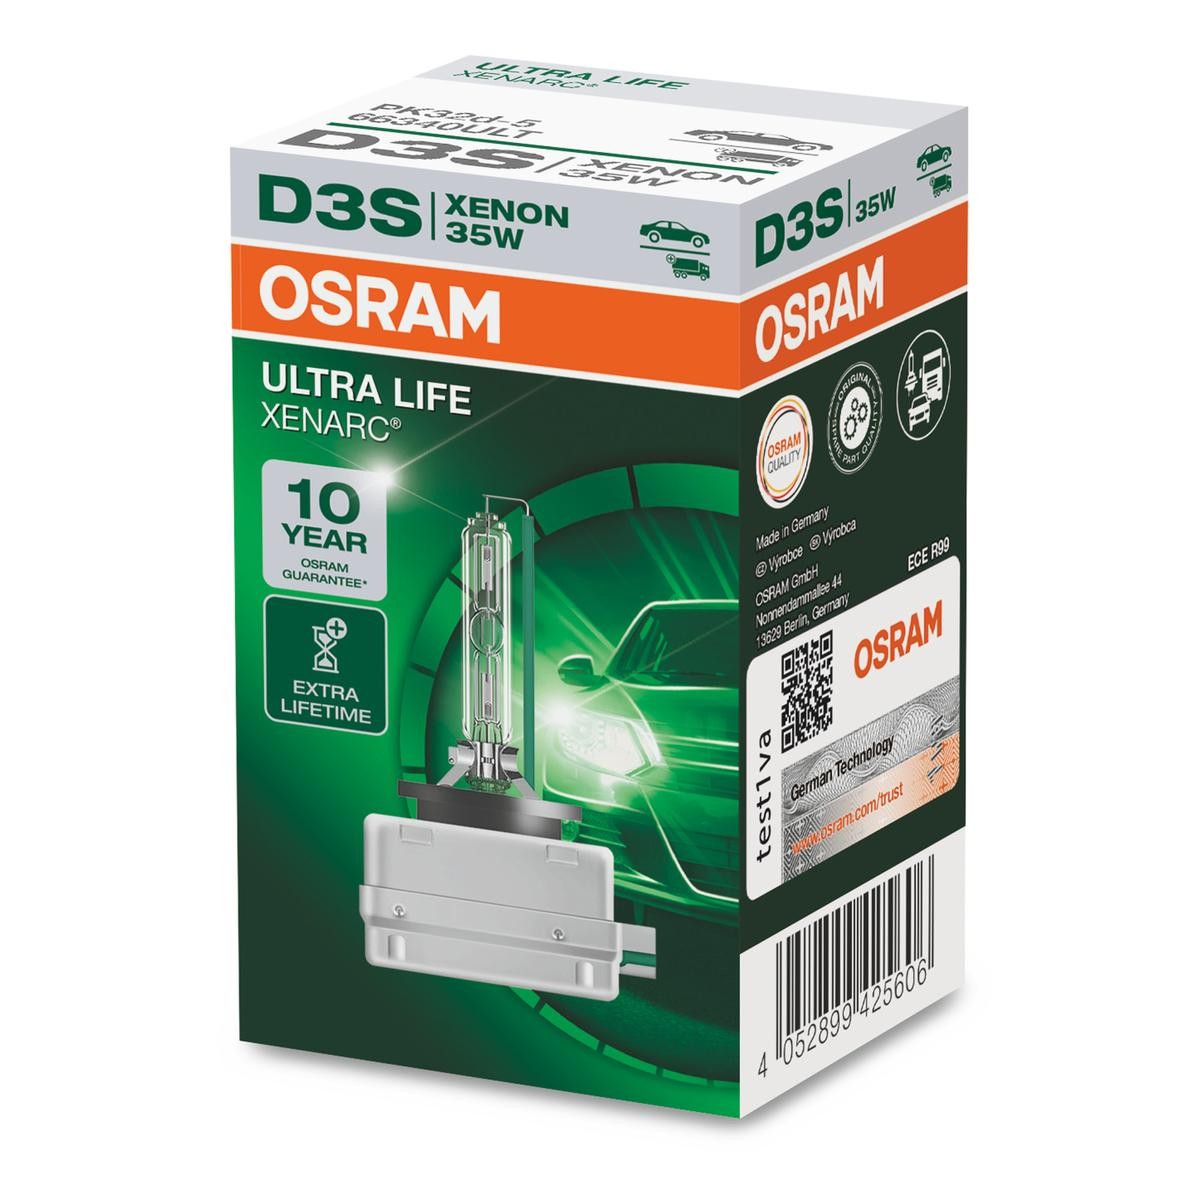 66340ULT OSRAM XENARC ULTRA LIFE D3S 42V 35W 4200K Xenon Bulb